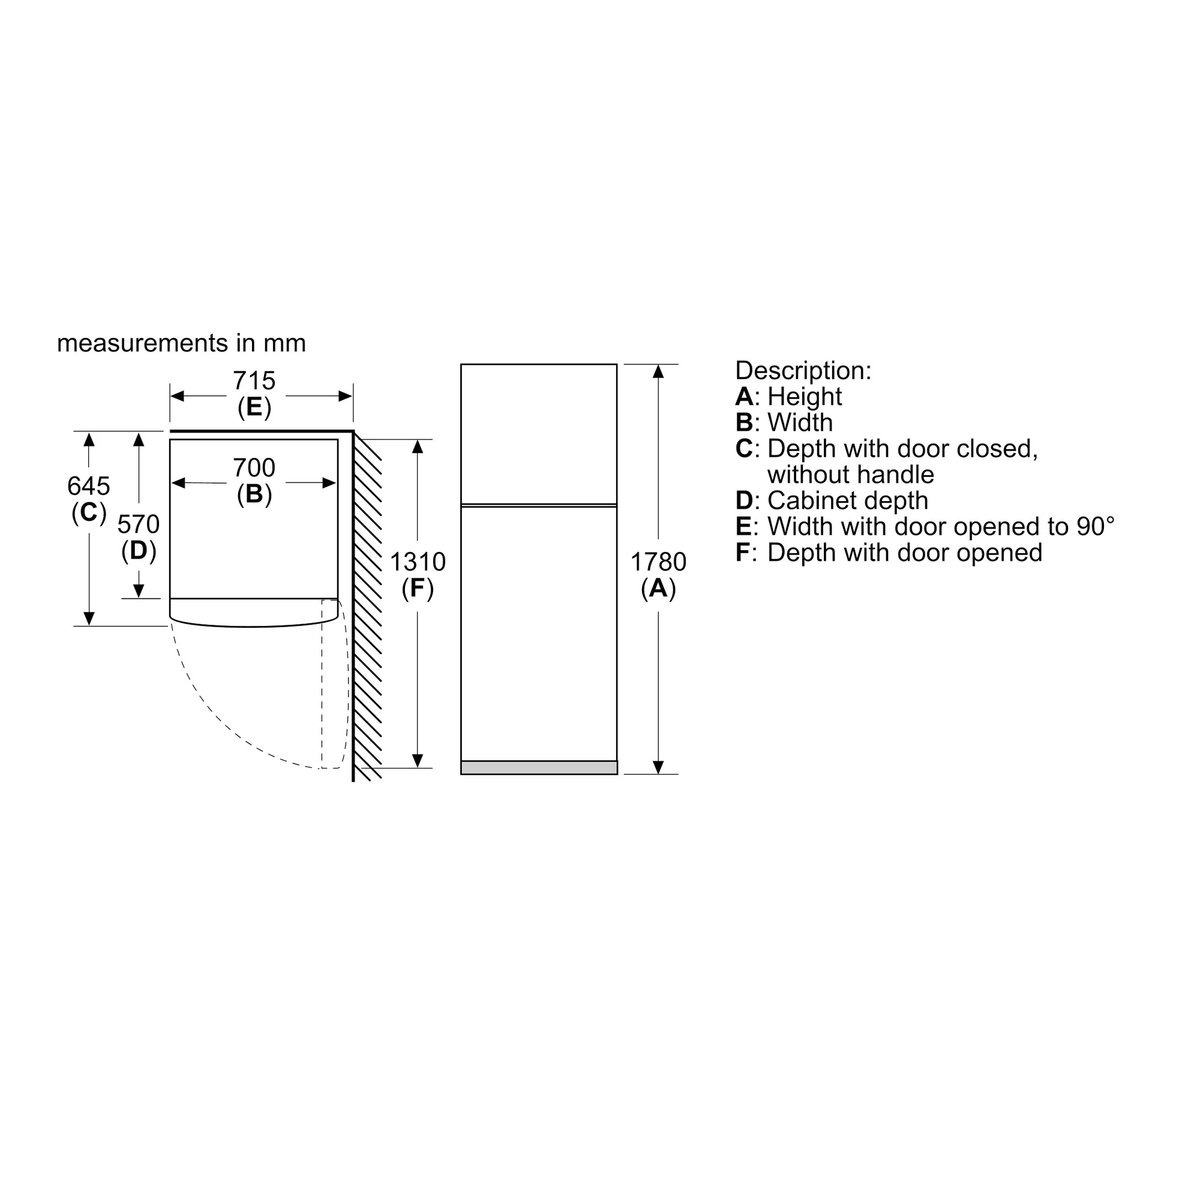 Bosch Double Door Refrigerator KDN43N120M 430Ltr